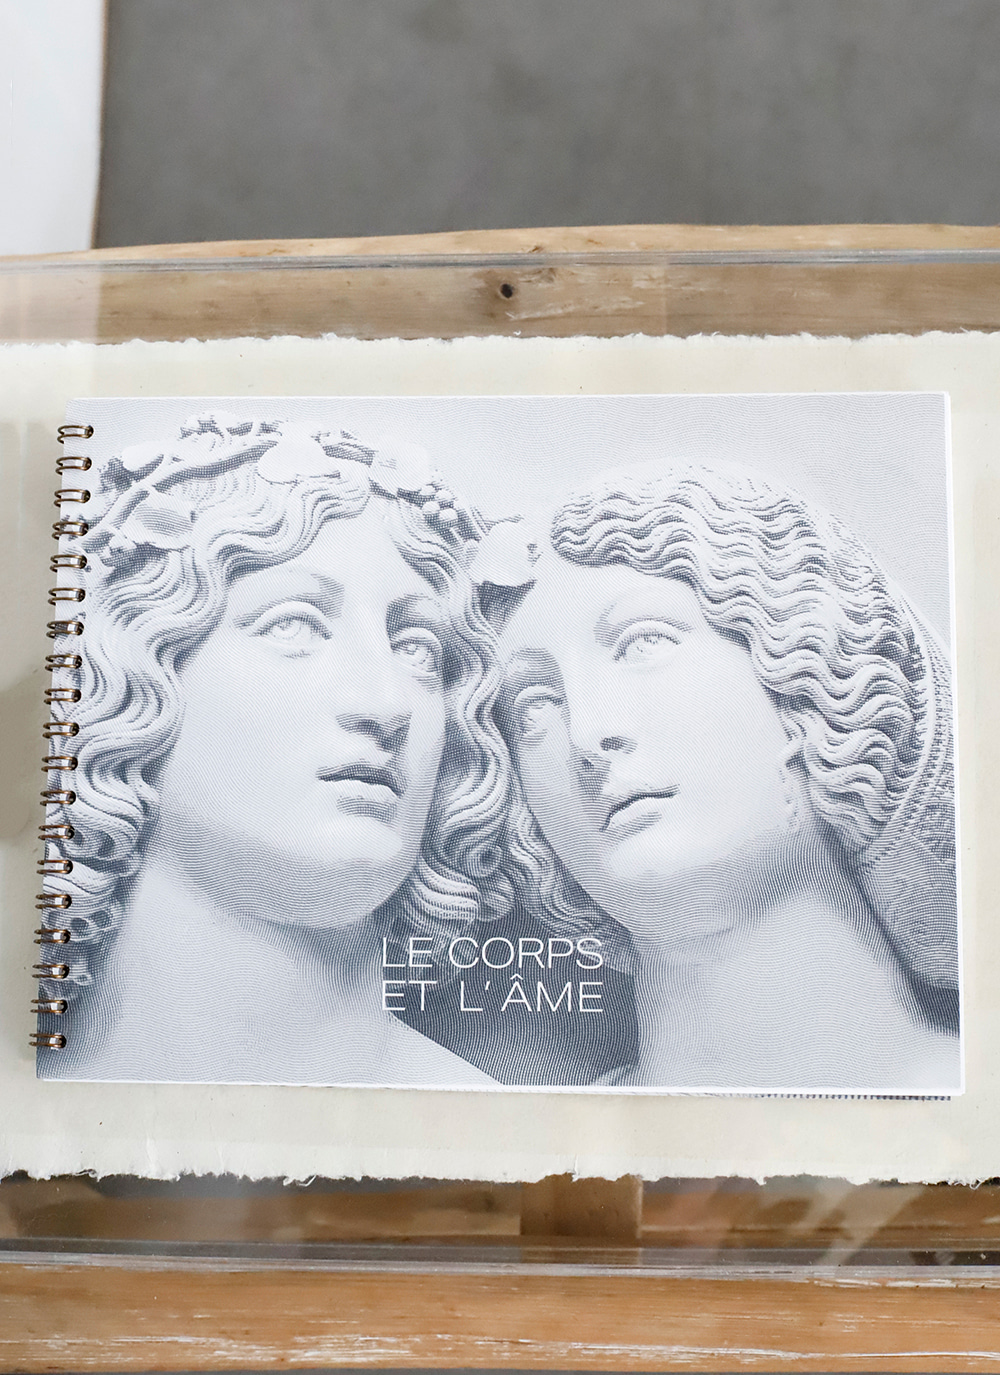 Tullio Lombardo - Bacchus and Ariane Spiral notebook